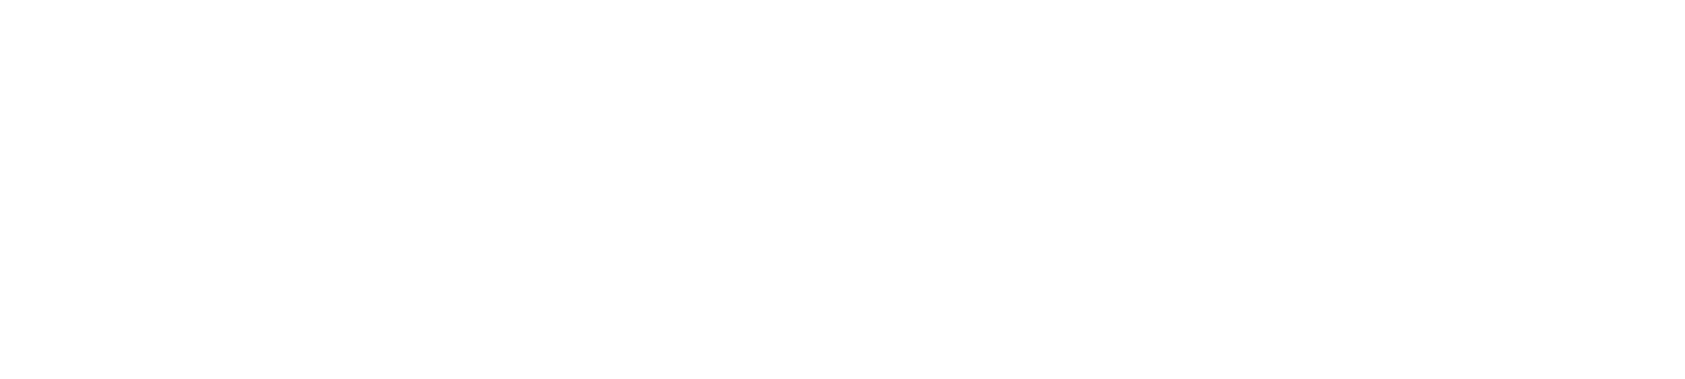 Logo Lotus Estudi